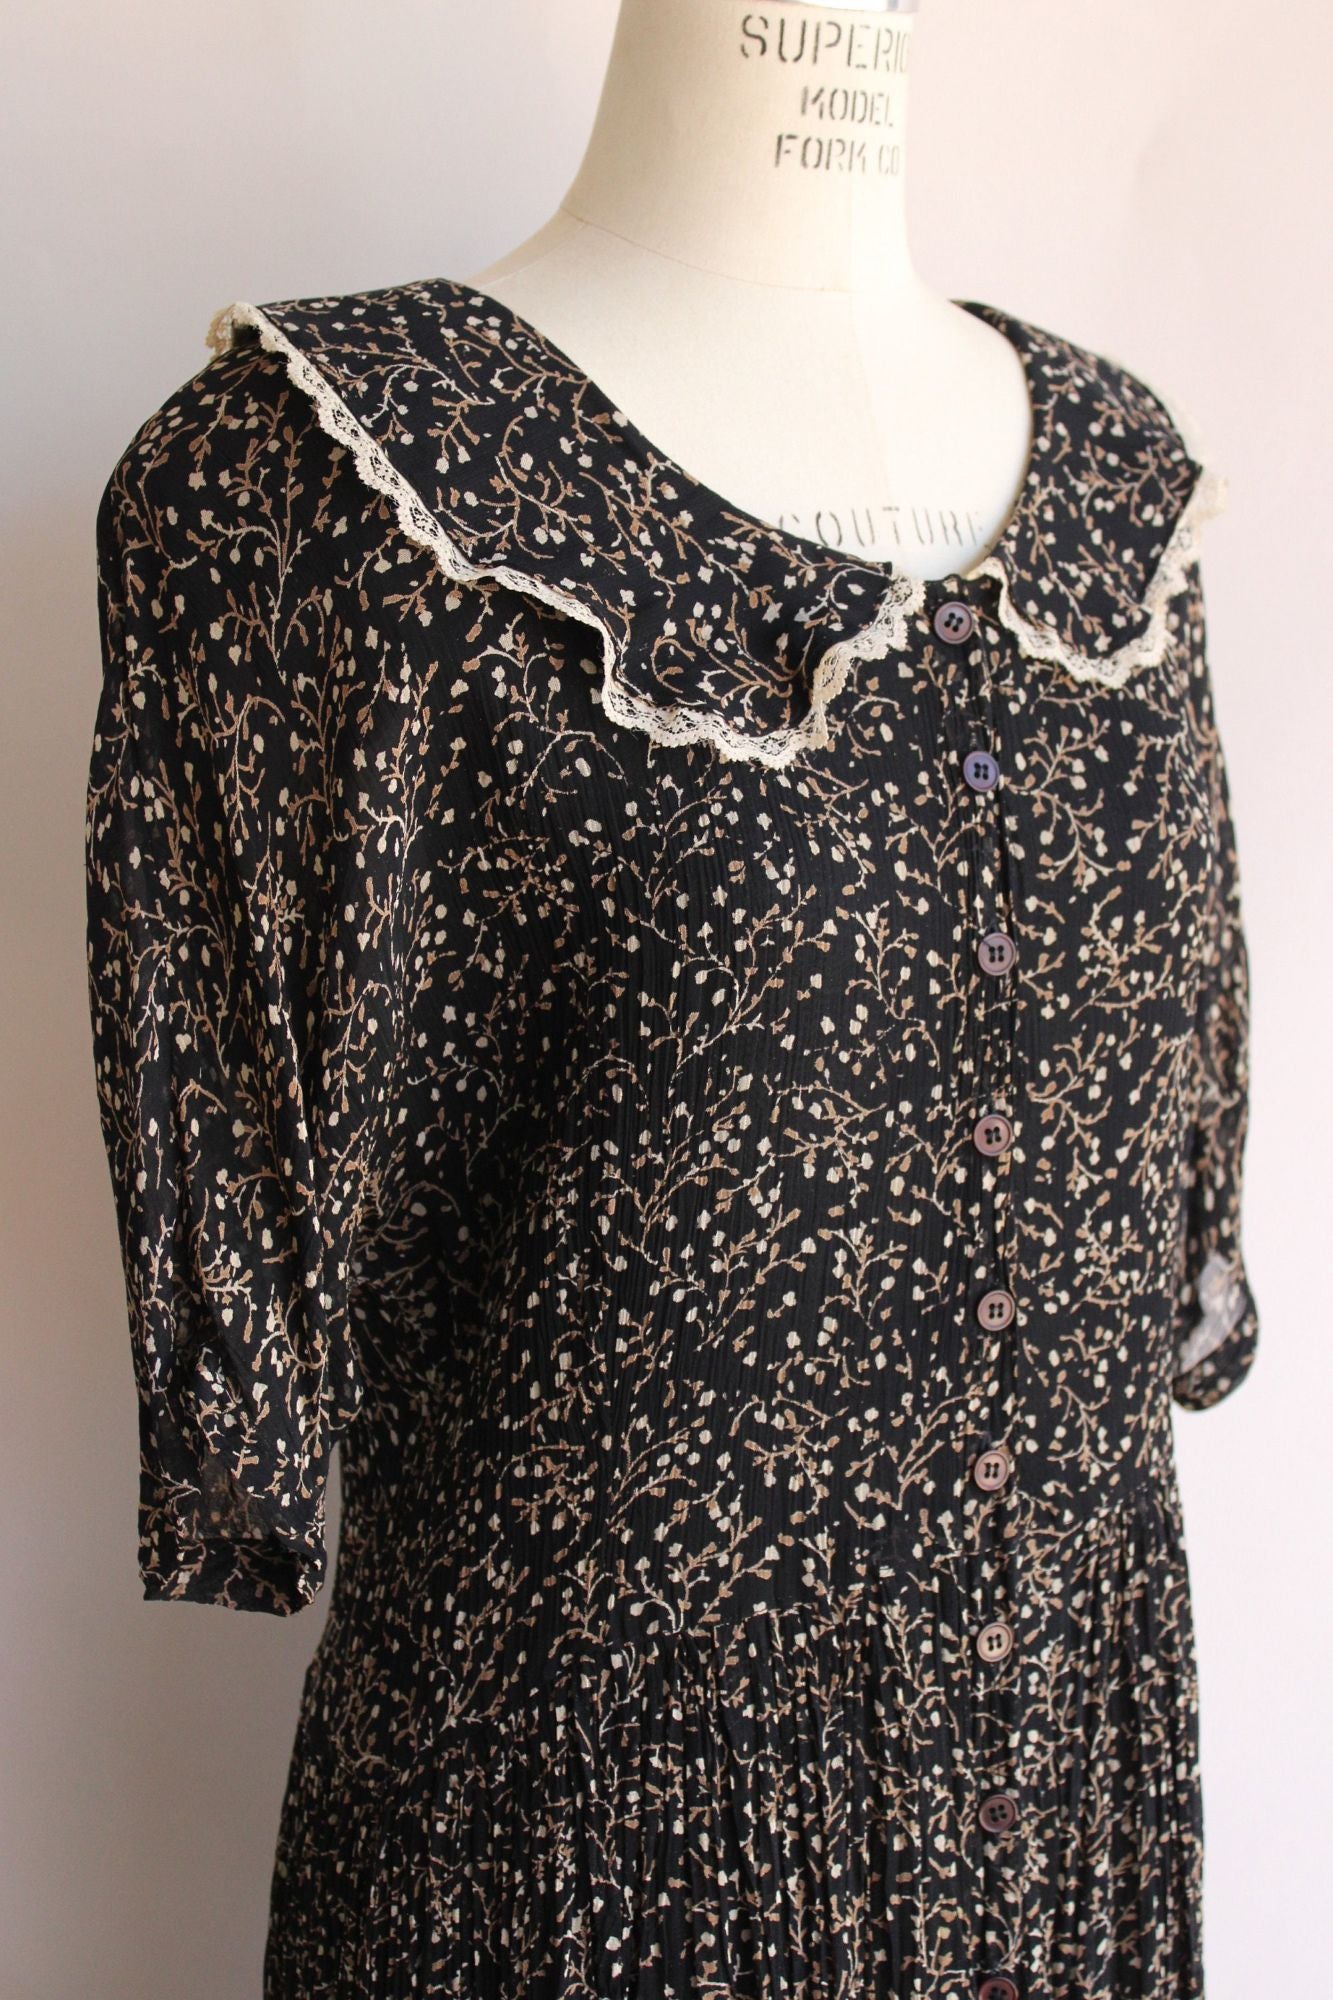 Vintage 1980's 1990s Black Floral Print Rayon Dress